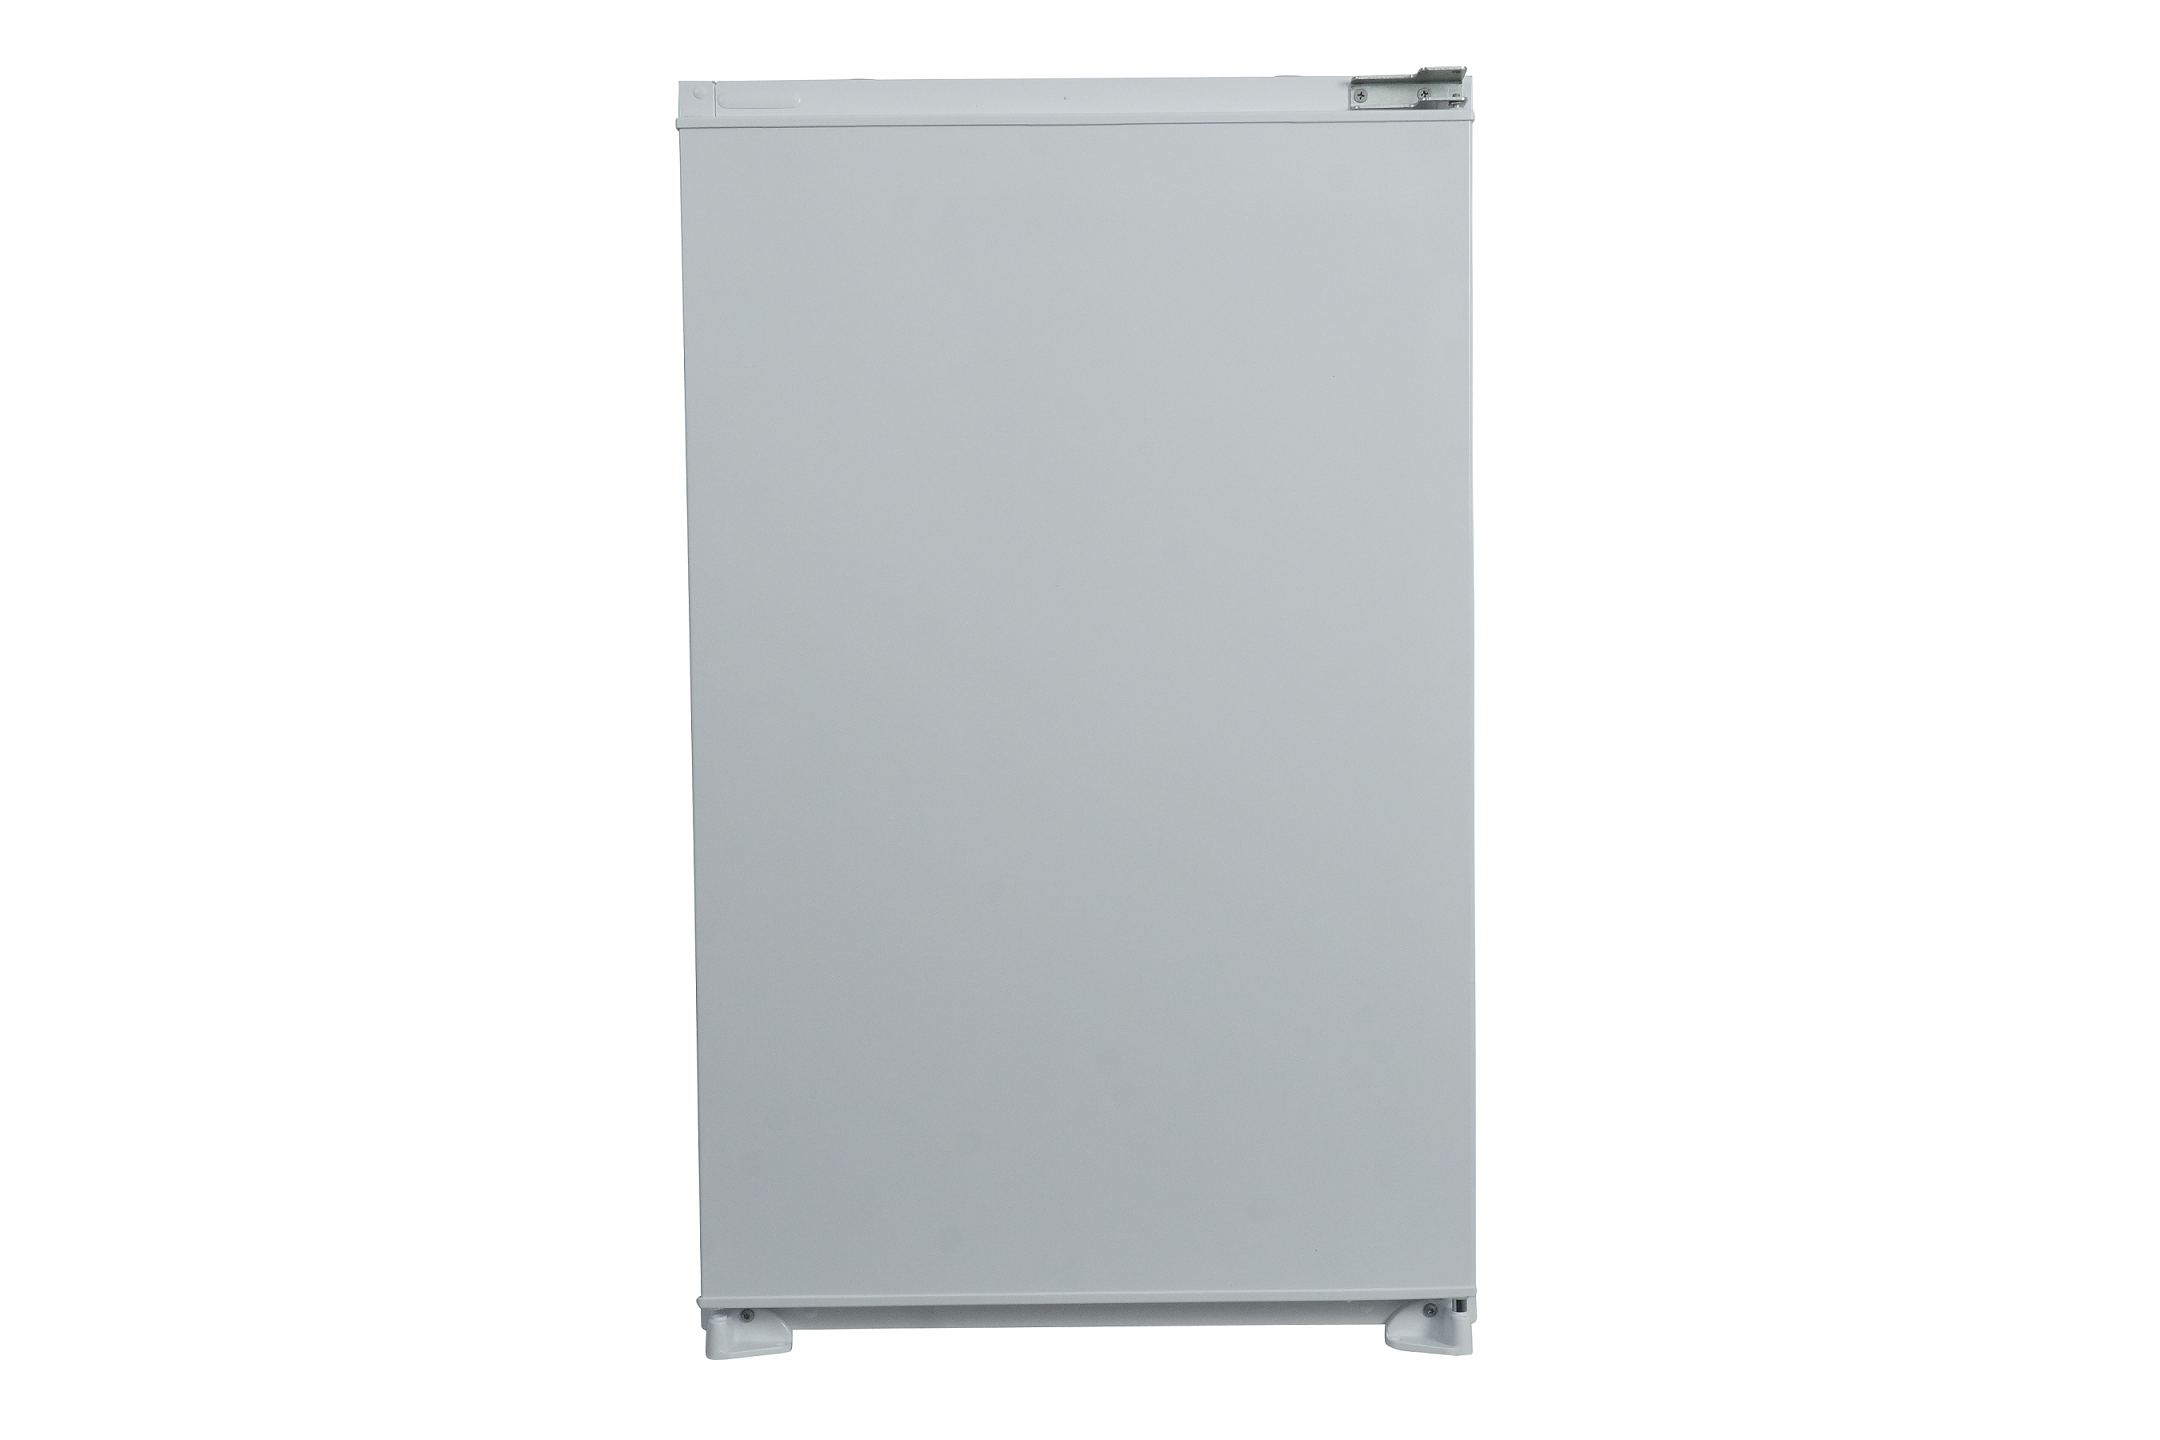 respekta Refrigerator Built-in Refrigerator Freezer Trailing Hinges 88 cm